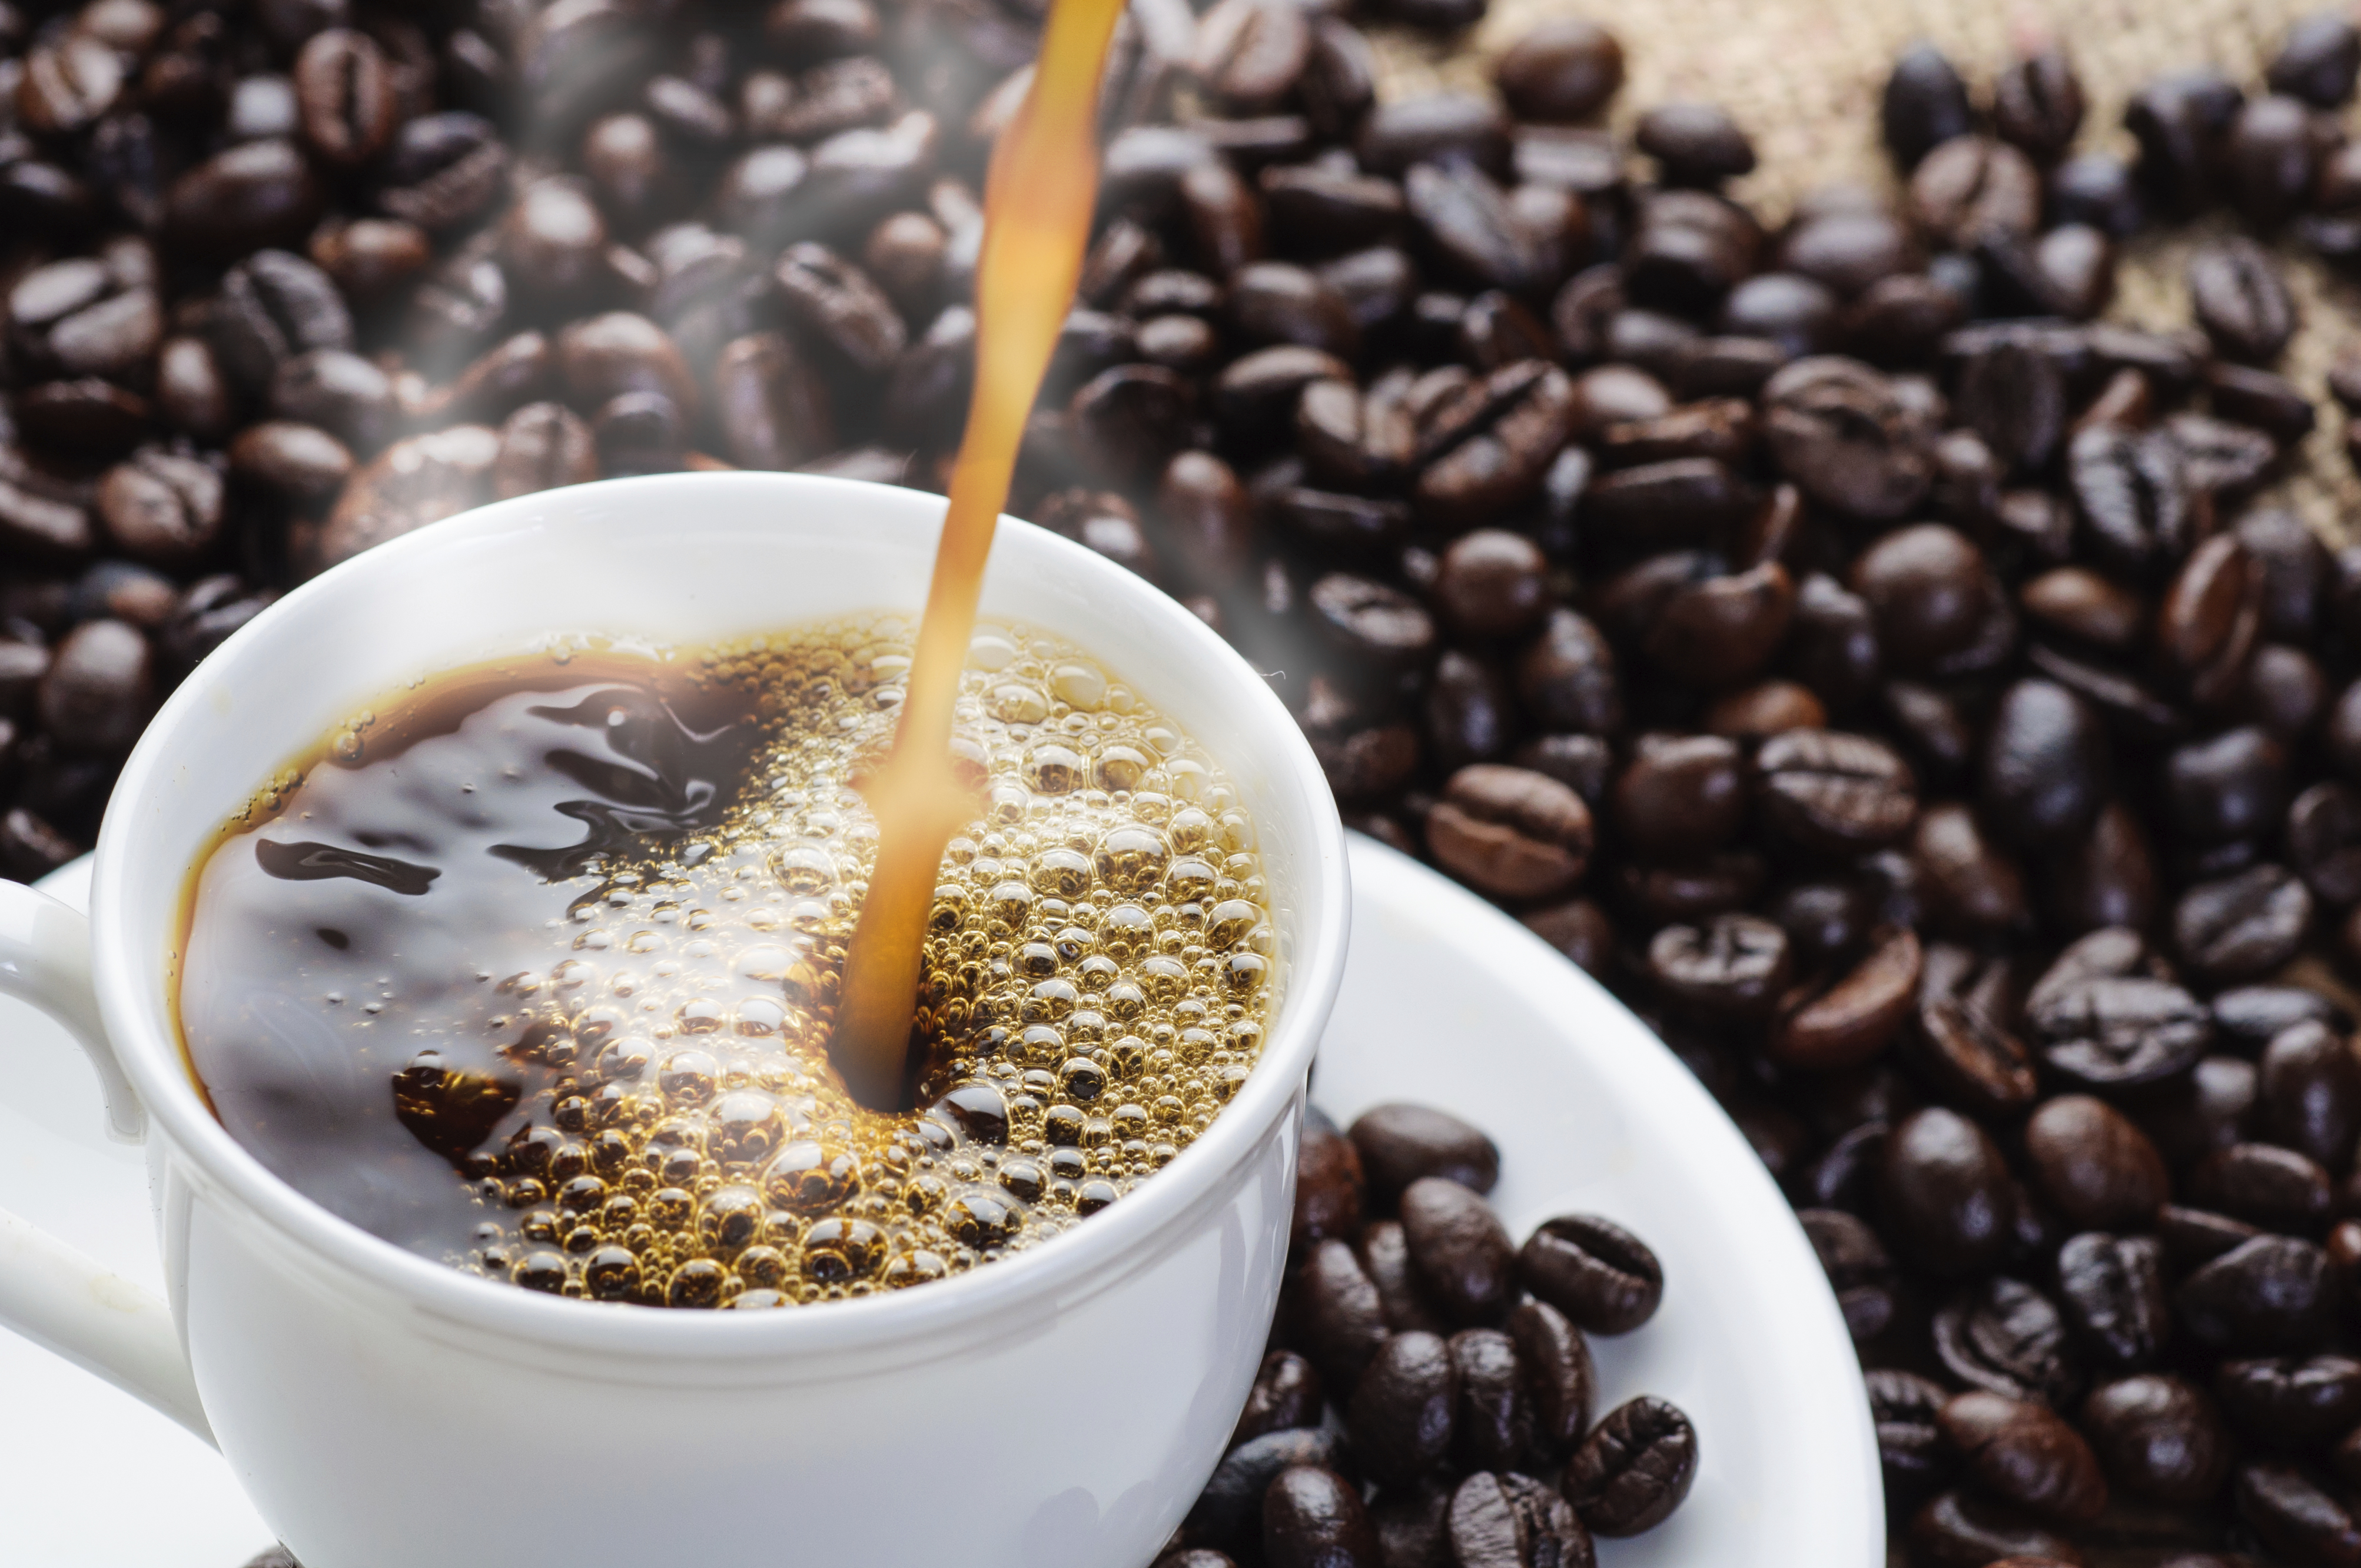 average amount of caffeine in coffee